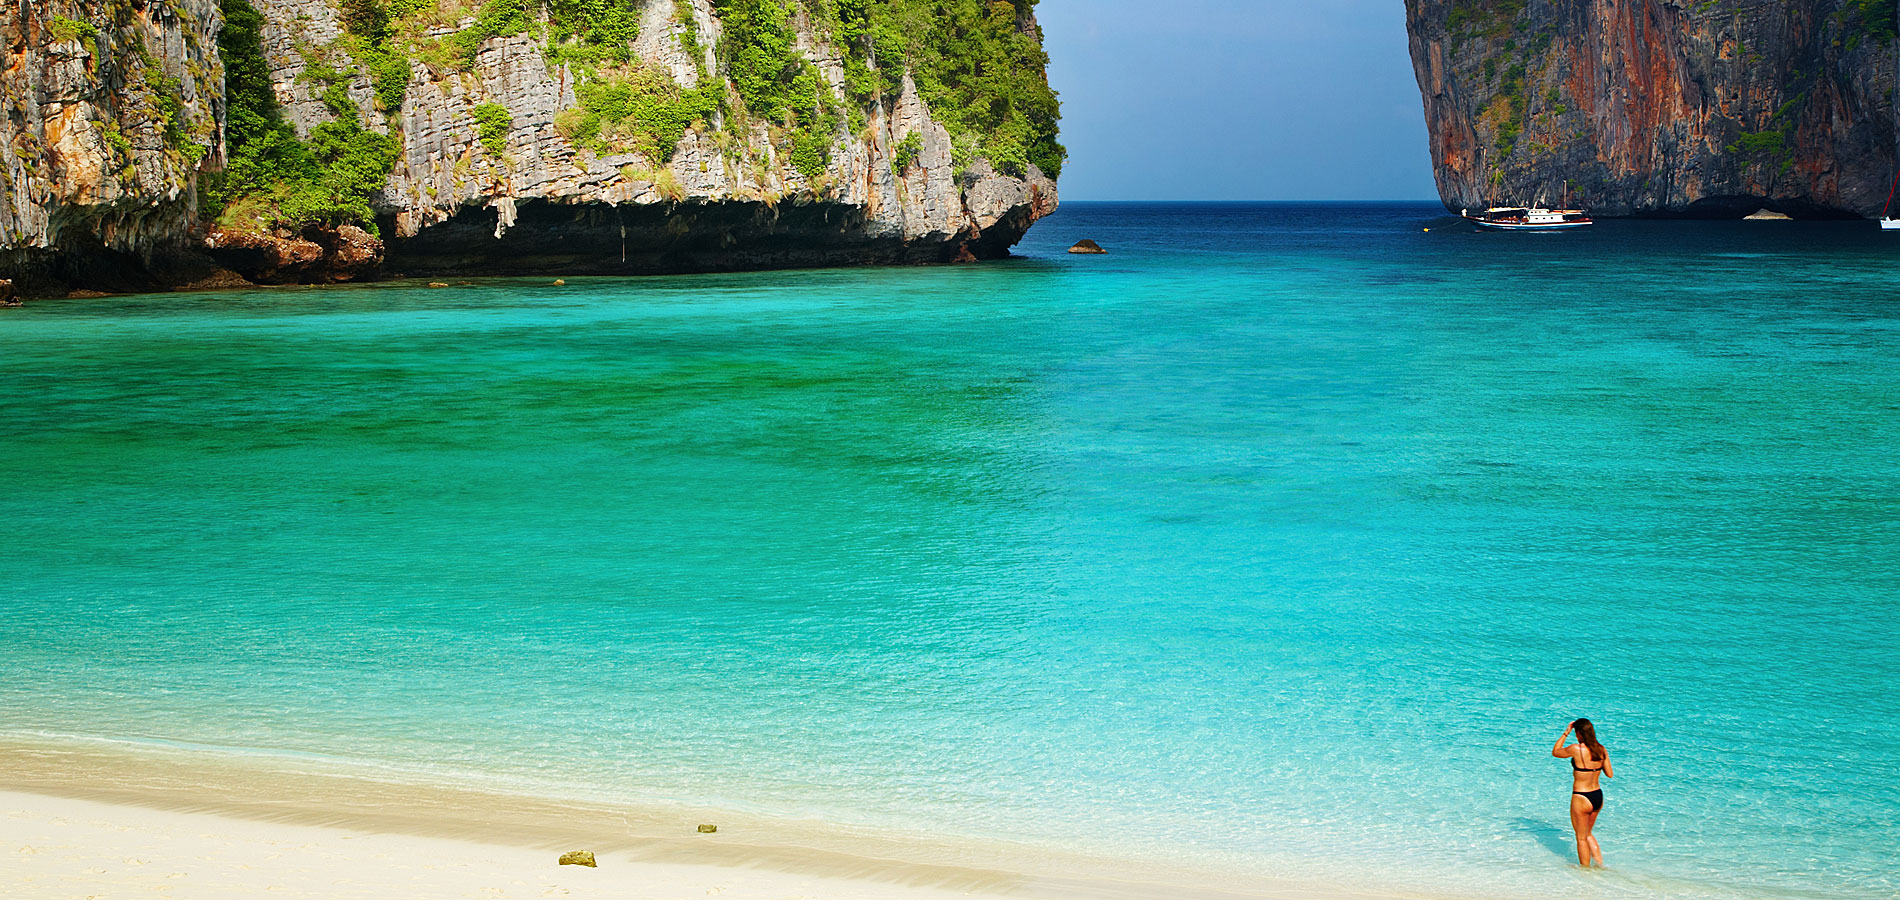 Krabi Resort Backgrounds, Compatible - PC, Mobile, Gadgets| 1900x900 px